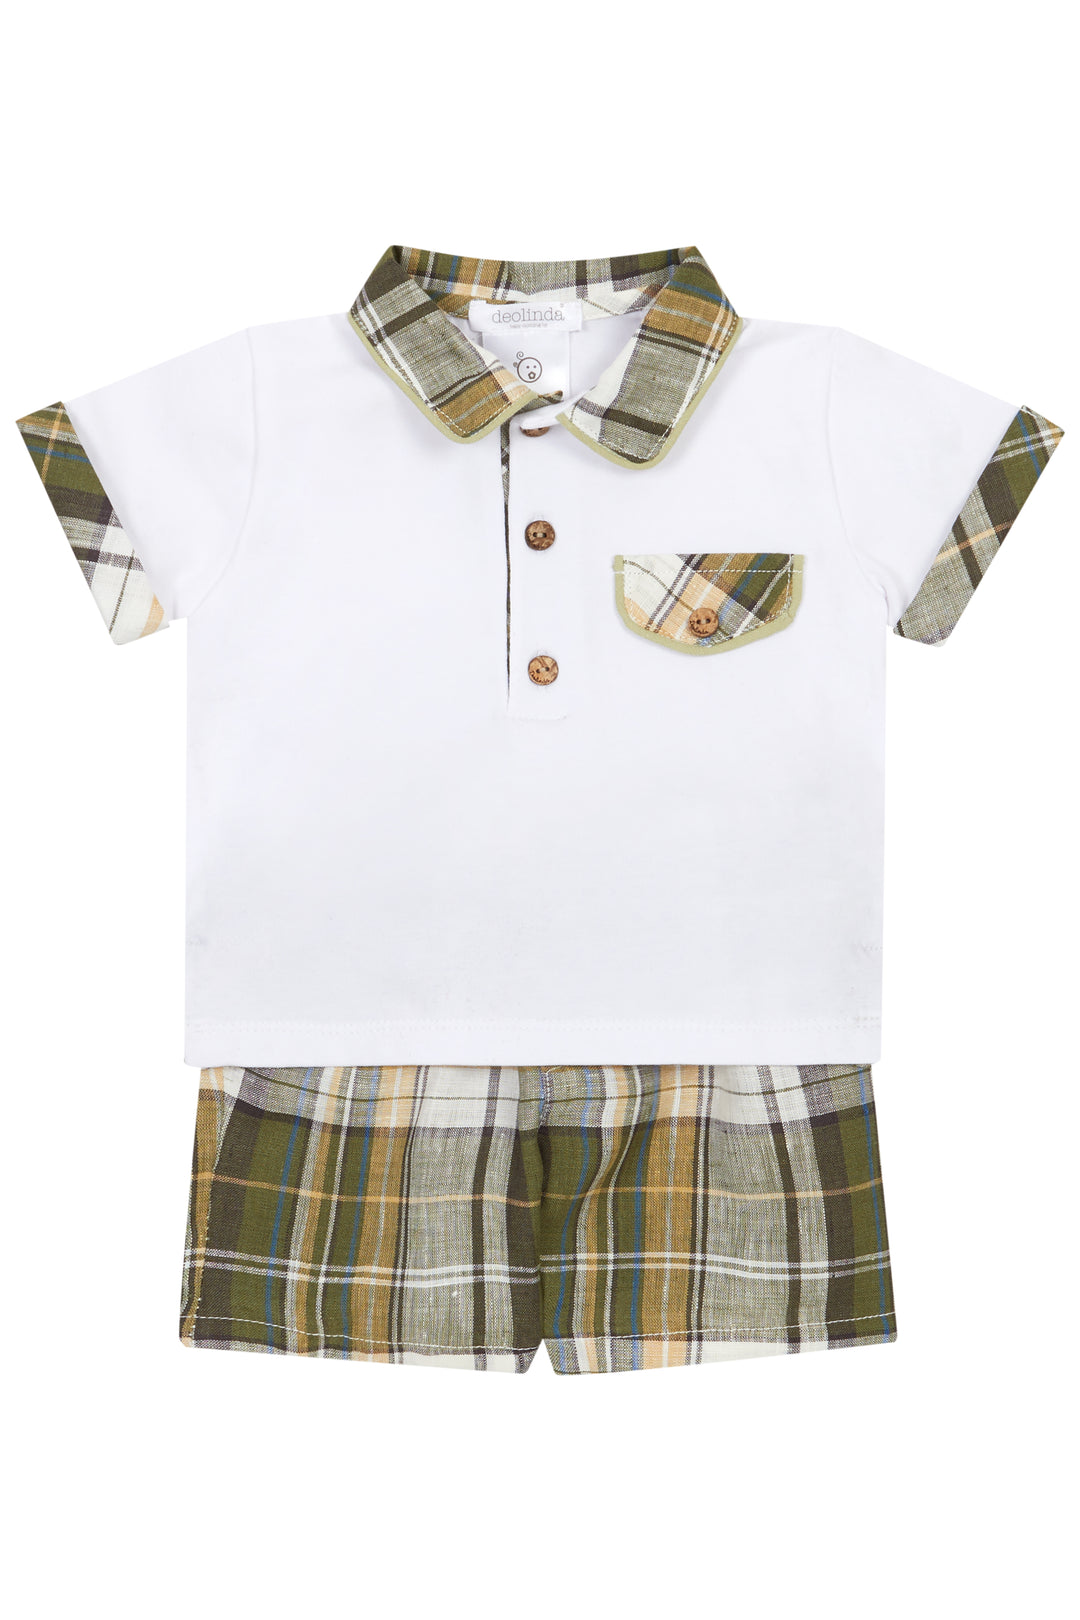 Deolinda PREORDER "Lachlan" Khaki Green Tartan Polo Shirt & Shorts | Millie and John